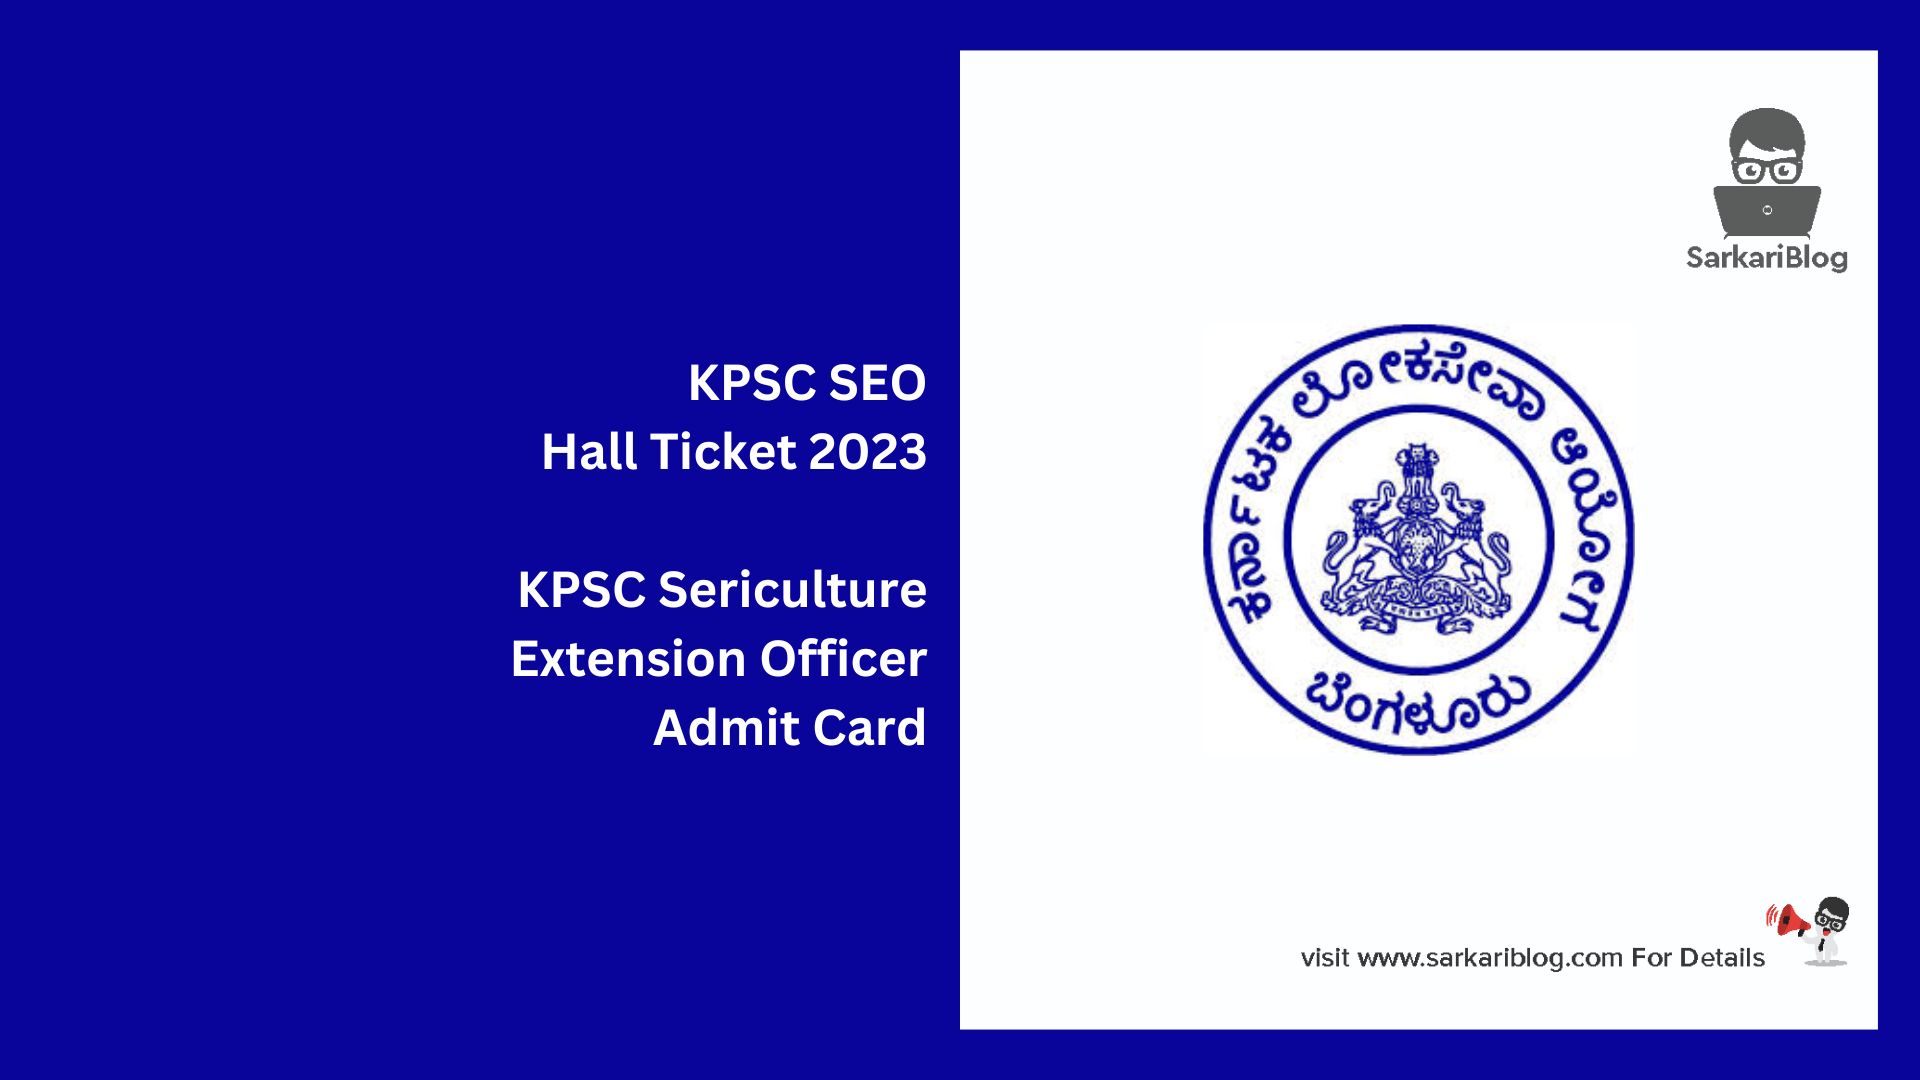 KPSC SEO Hall Ticket 2023